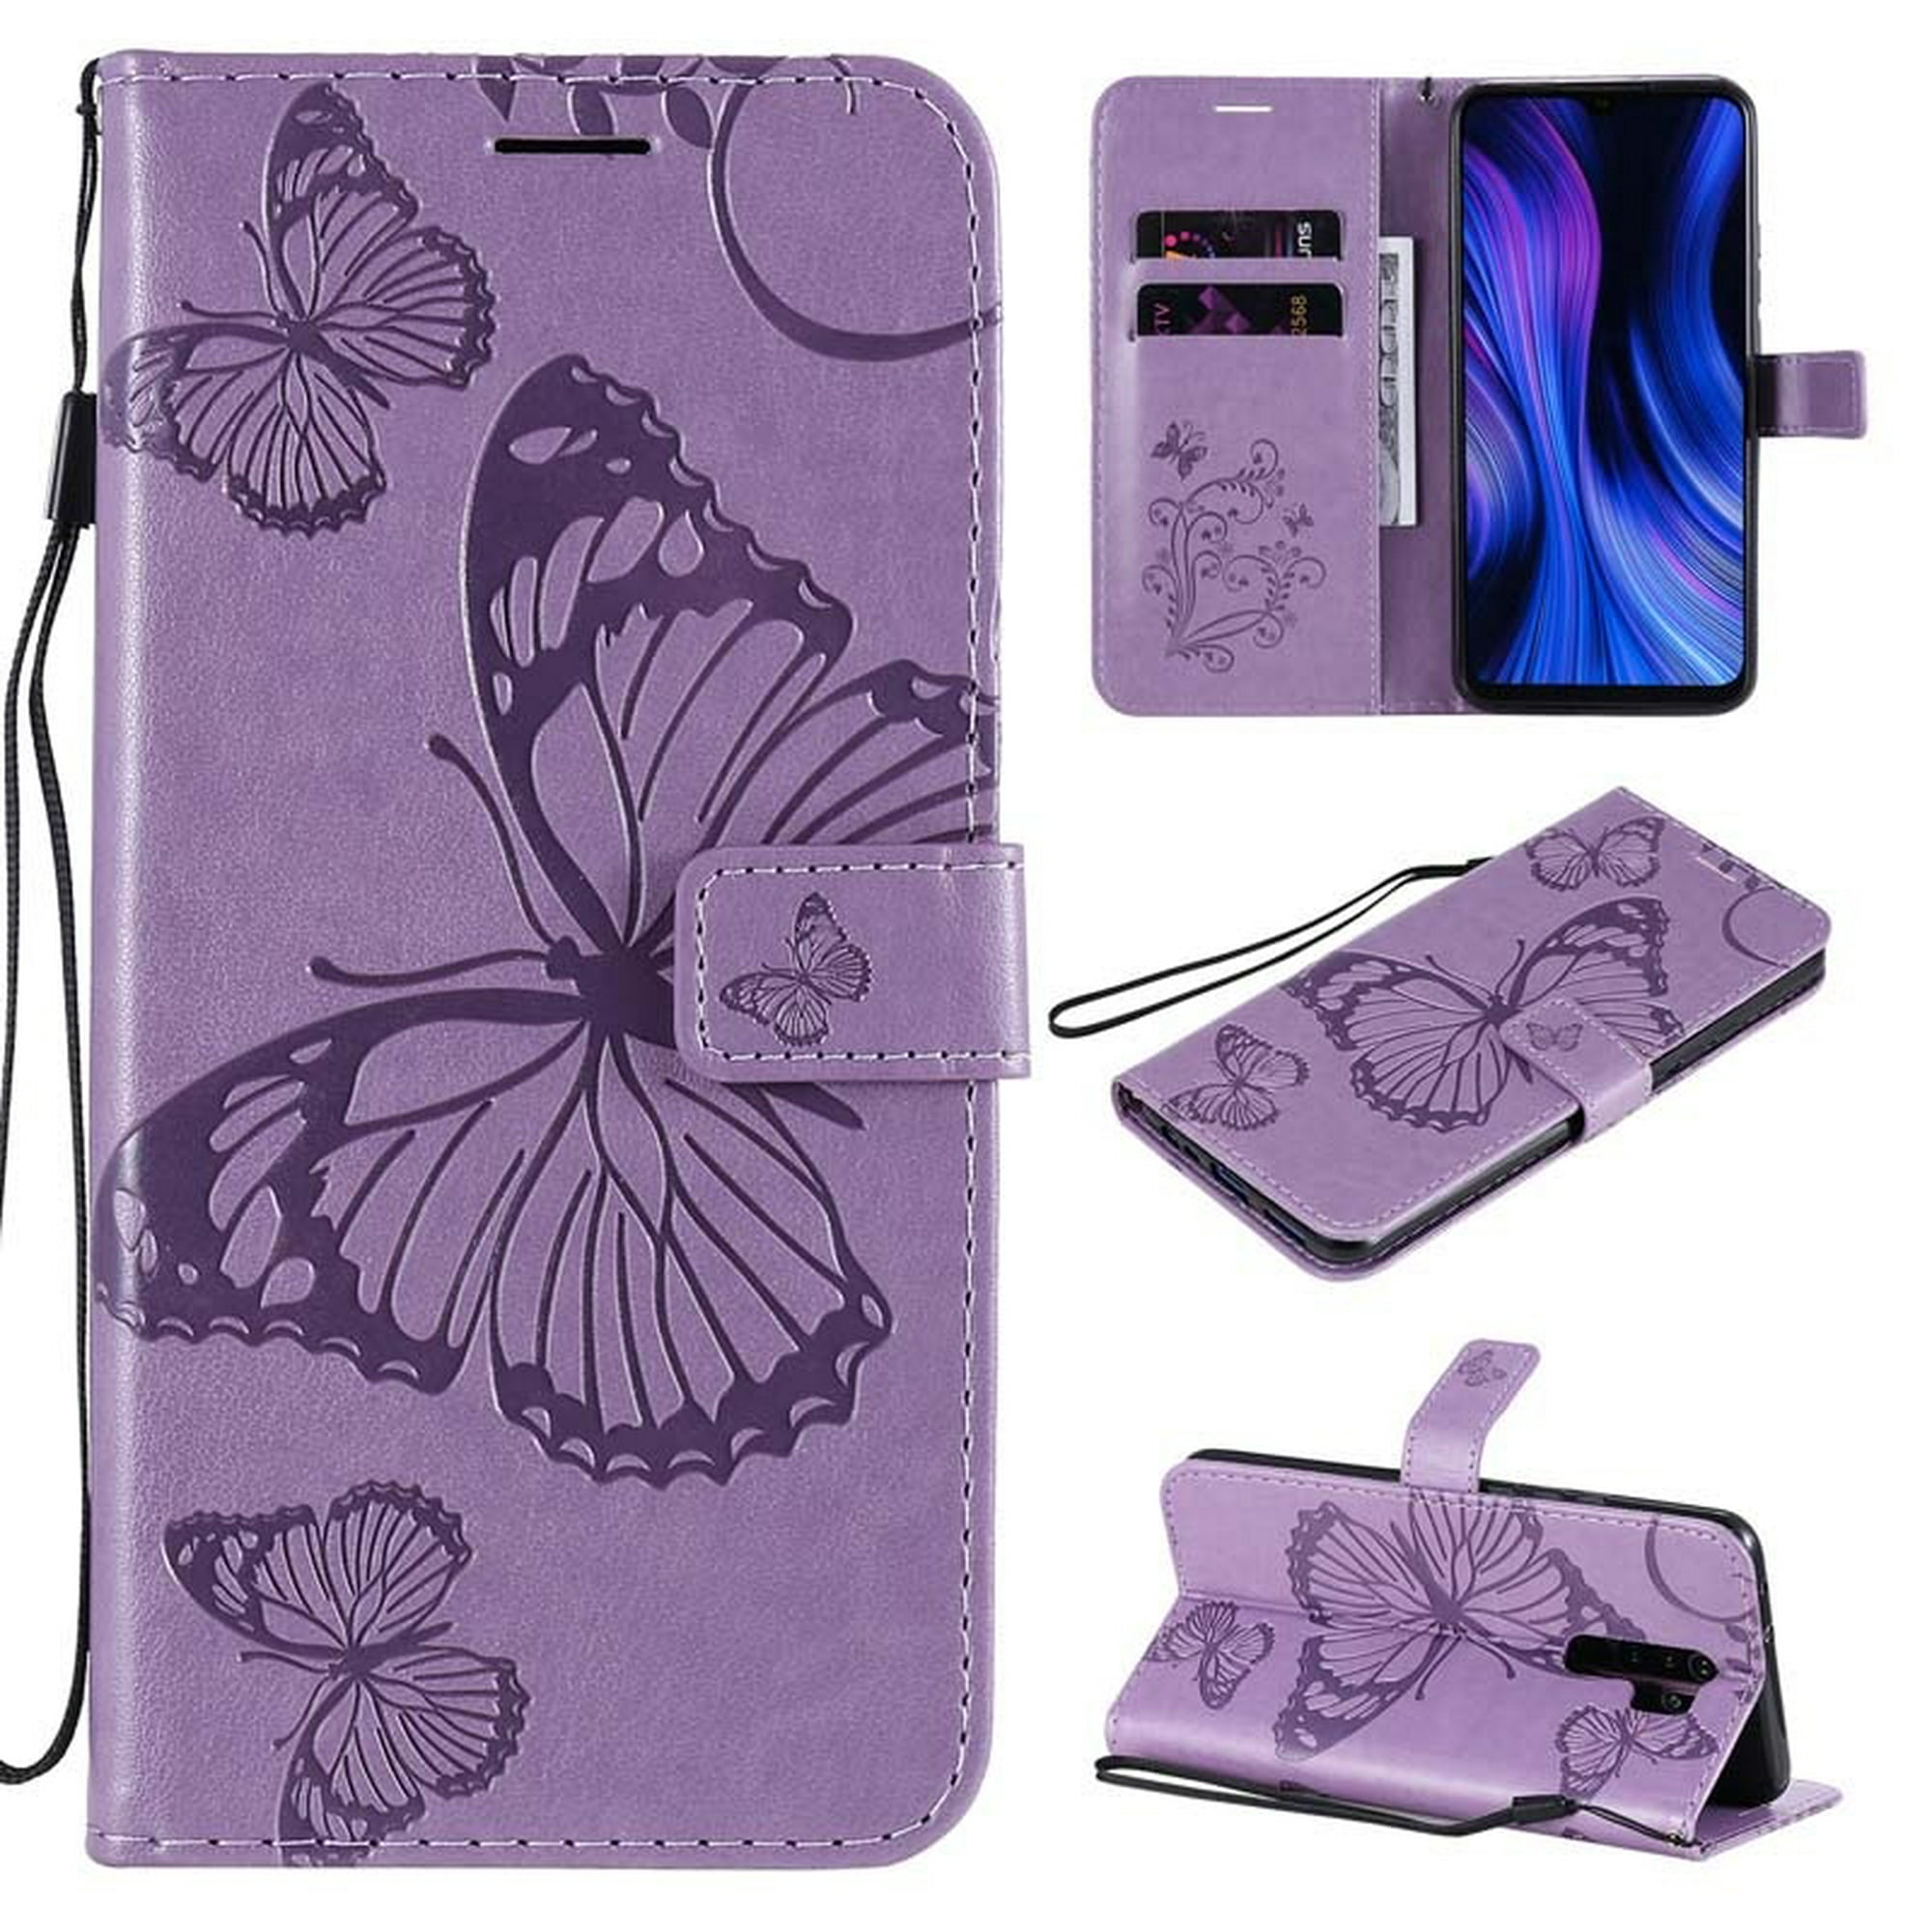 Funda Libro Xiaomi Redmi Note 7 cuero Soporte Dibujo Mariposas